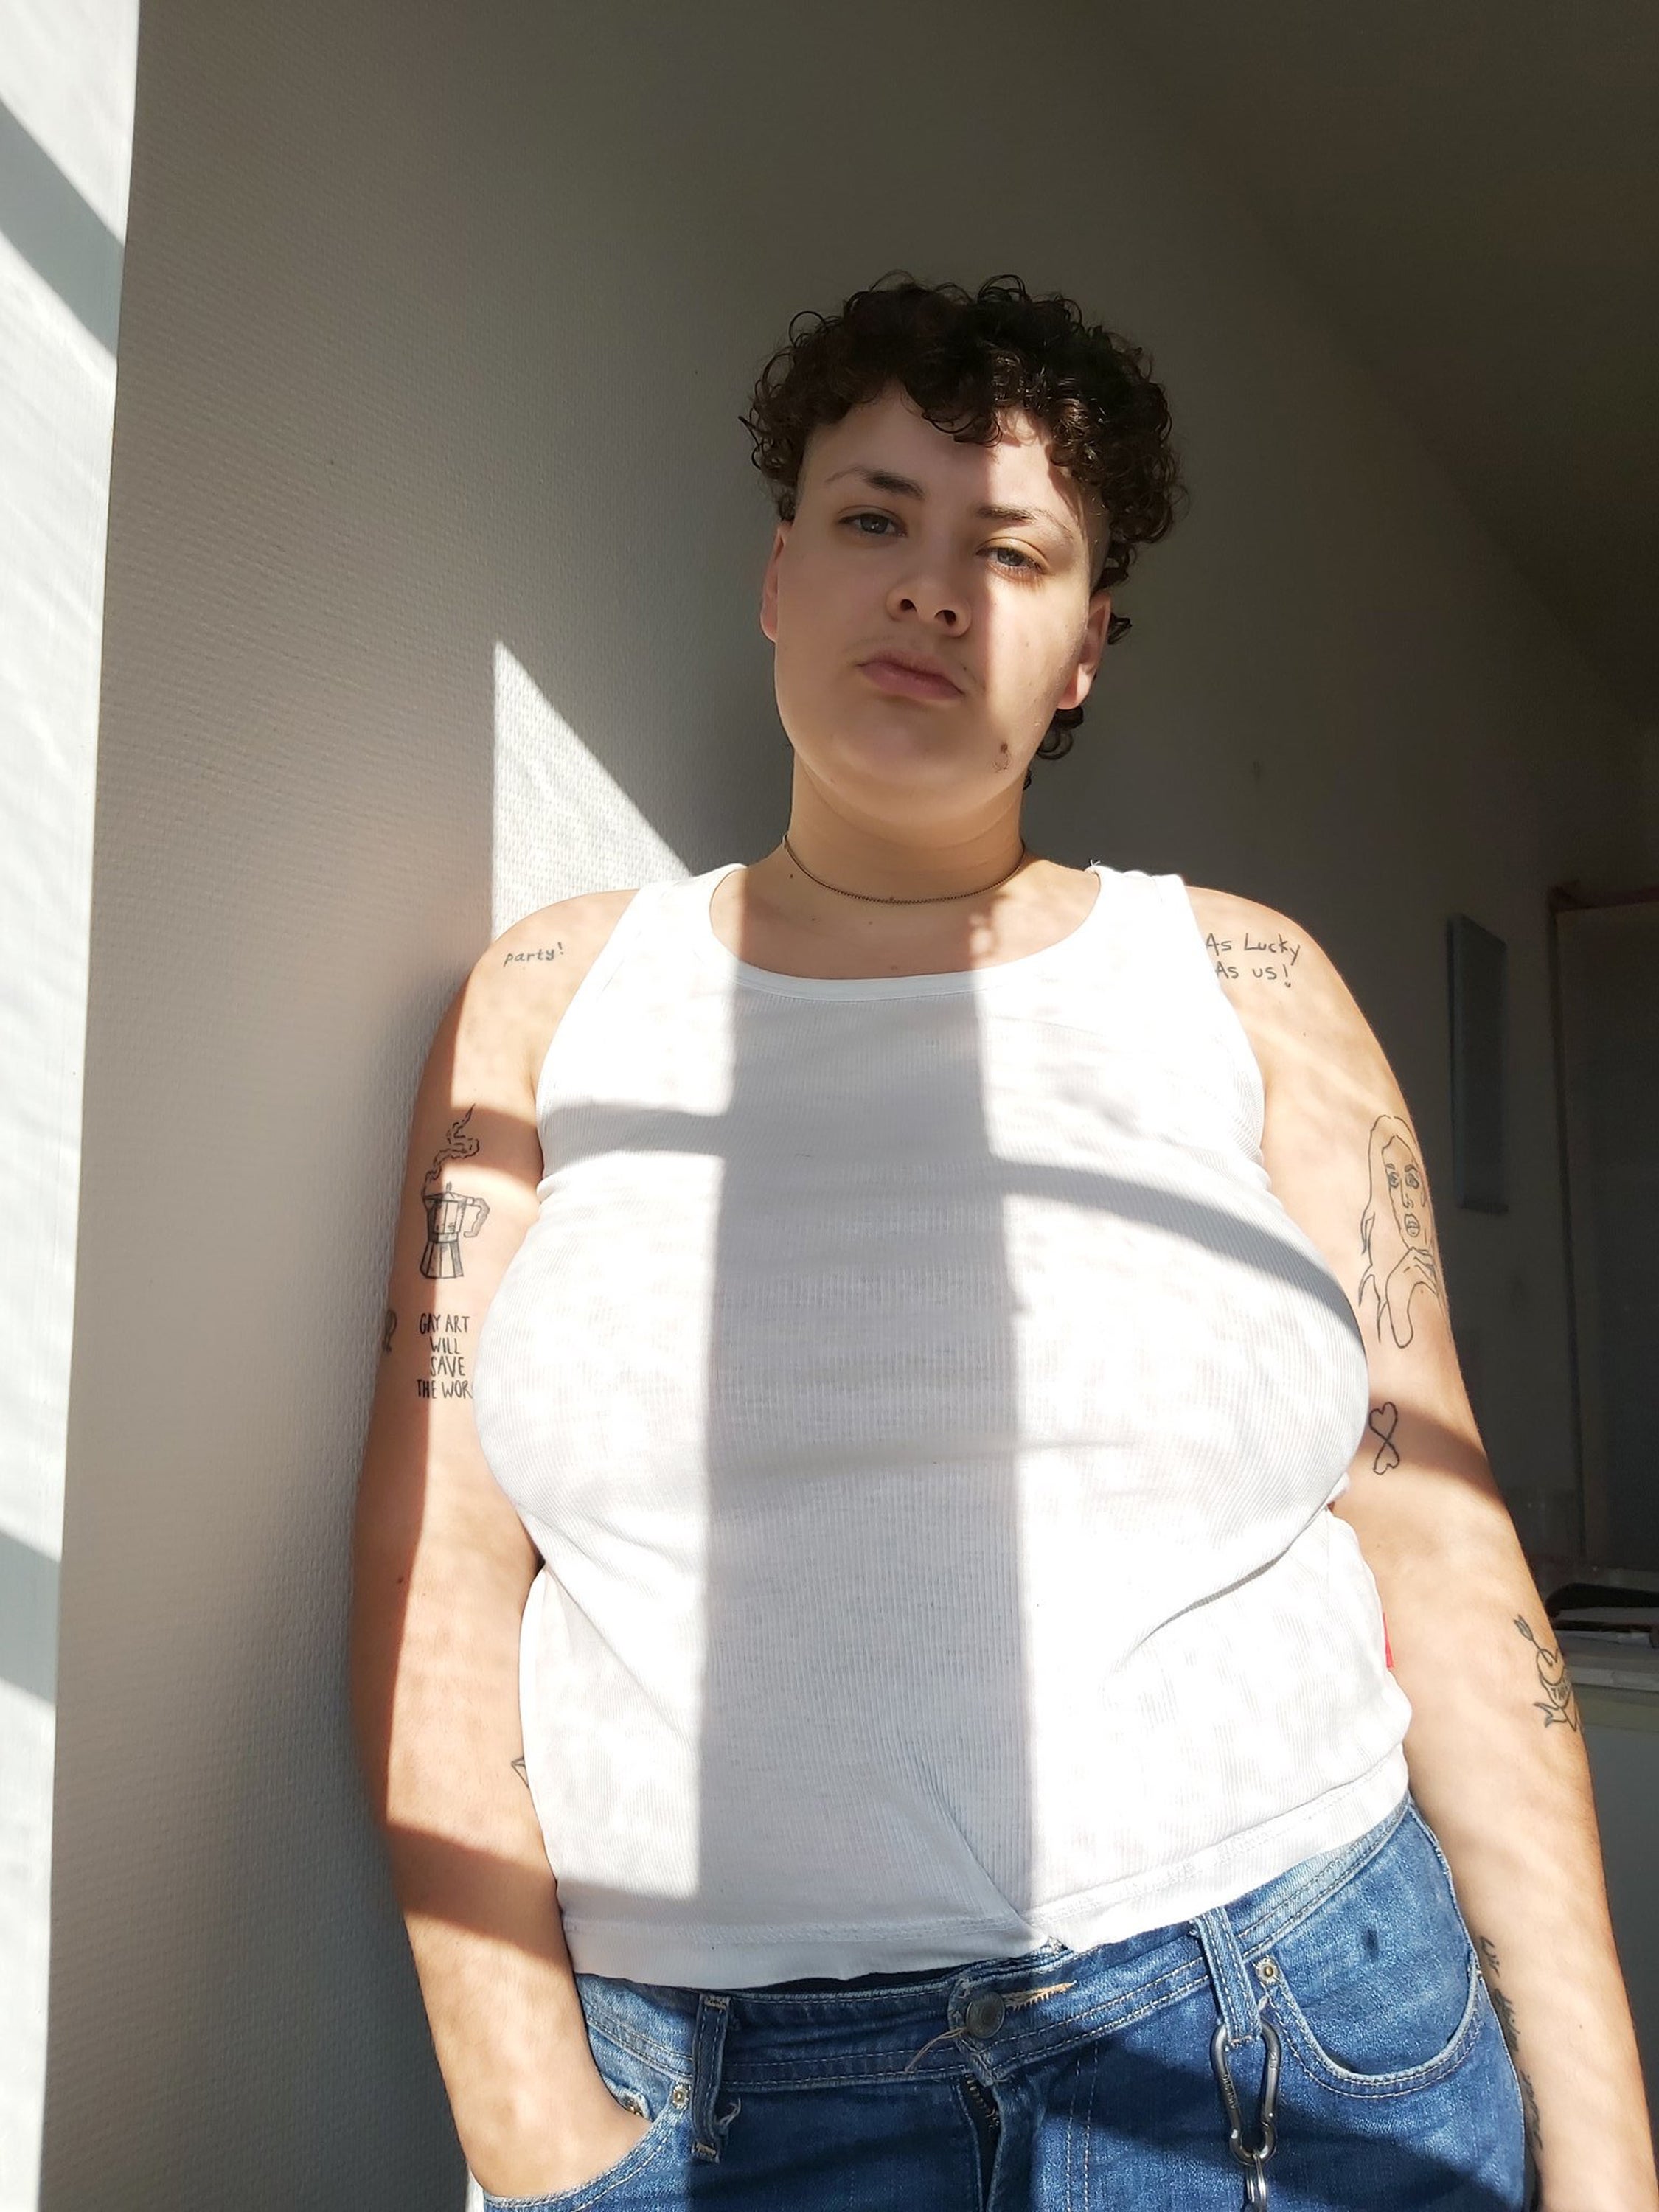 anila gopal share why are lesbians fat photos